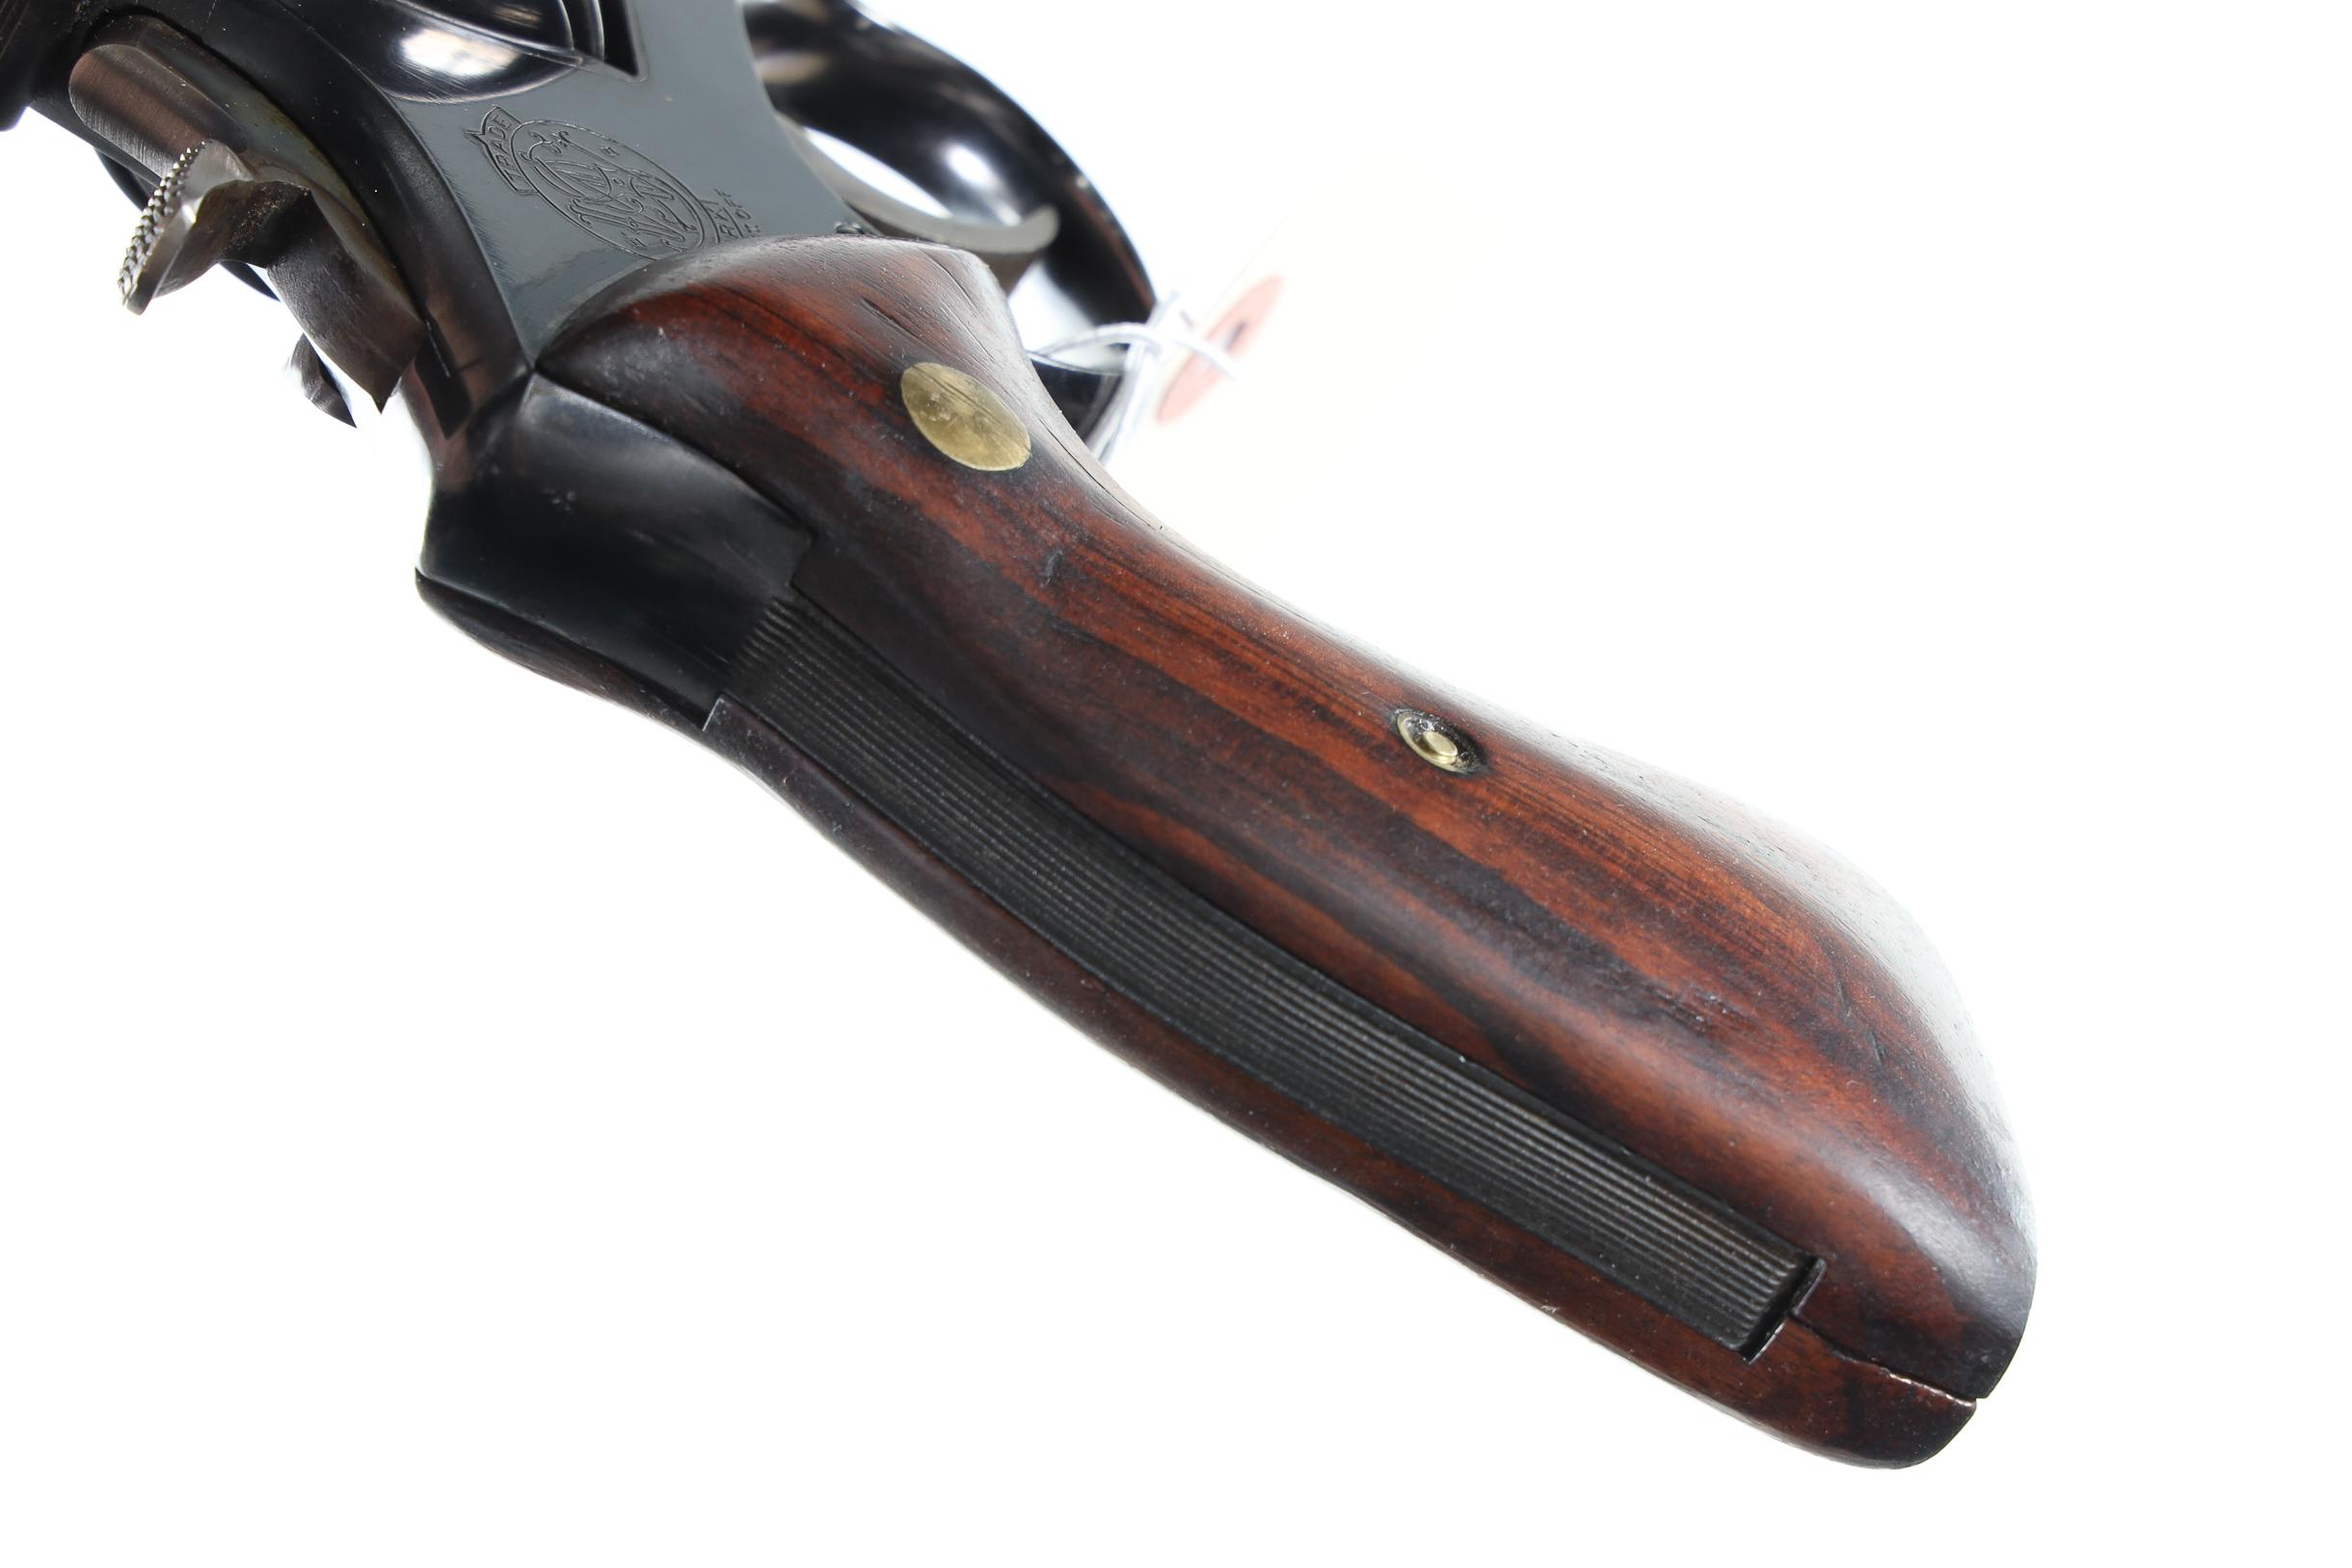 Smith & Wesson 17 Revolver .22 lr